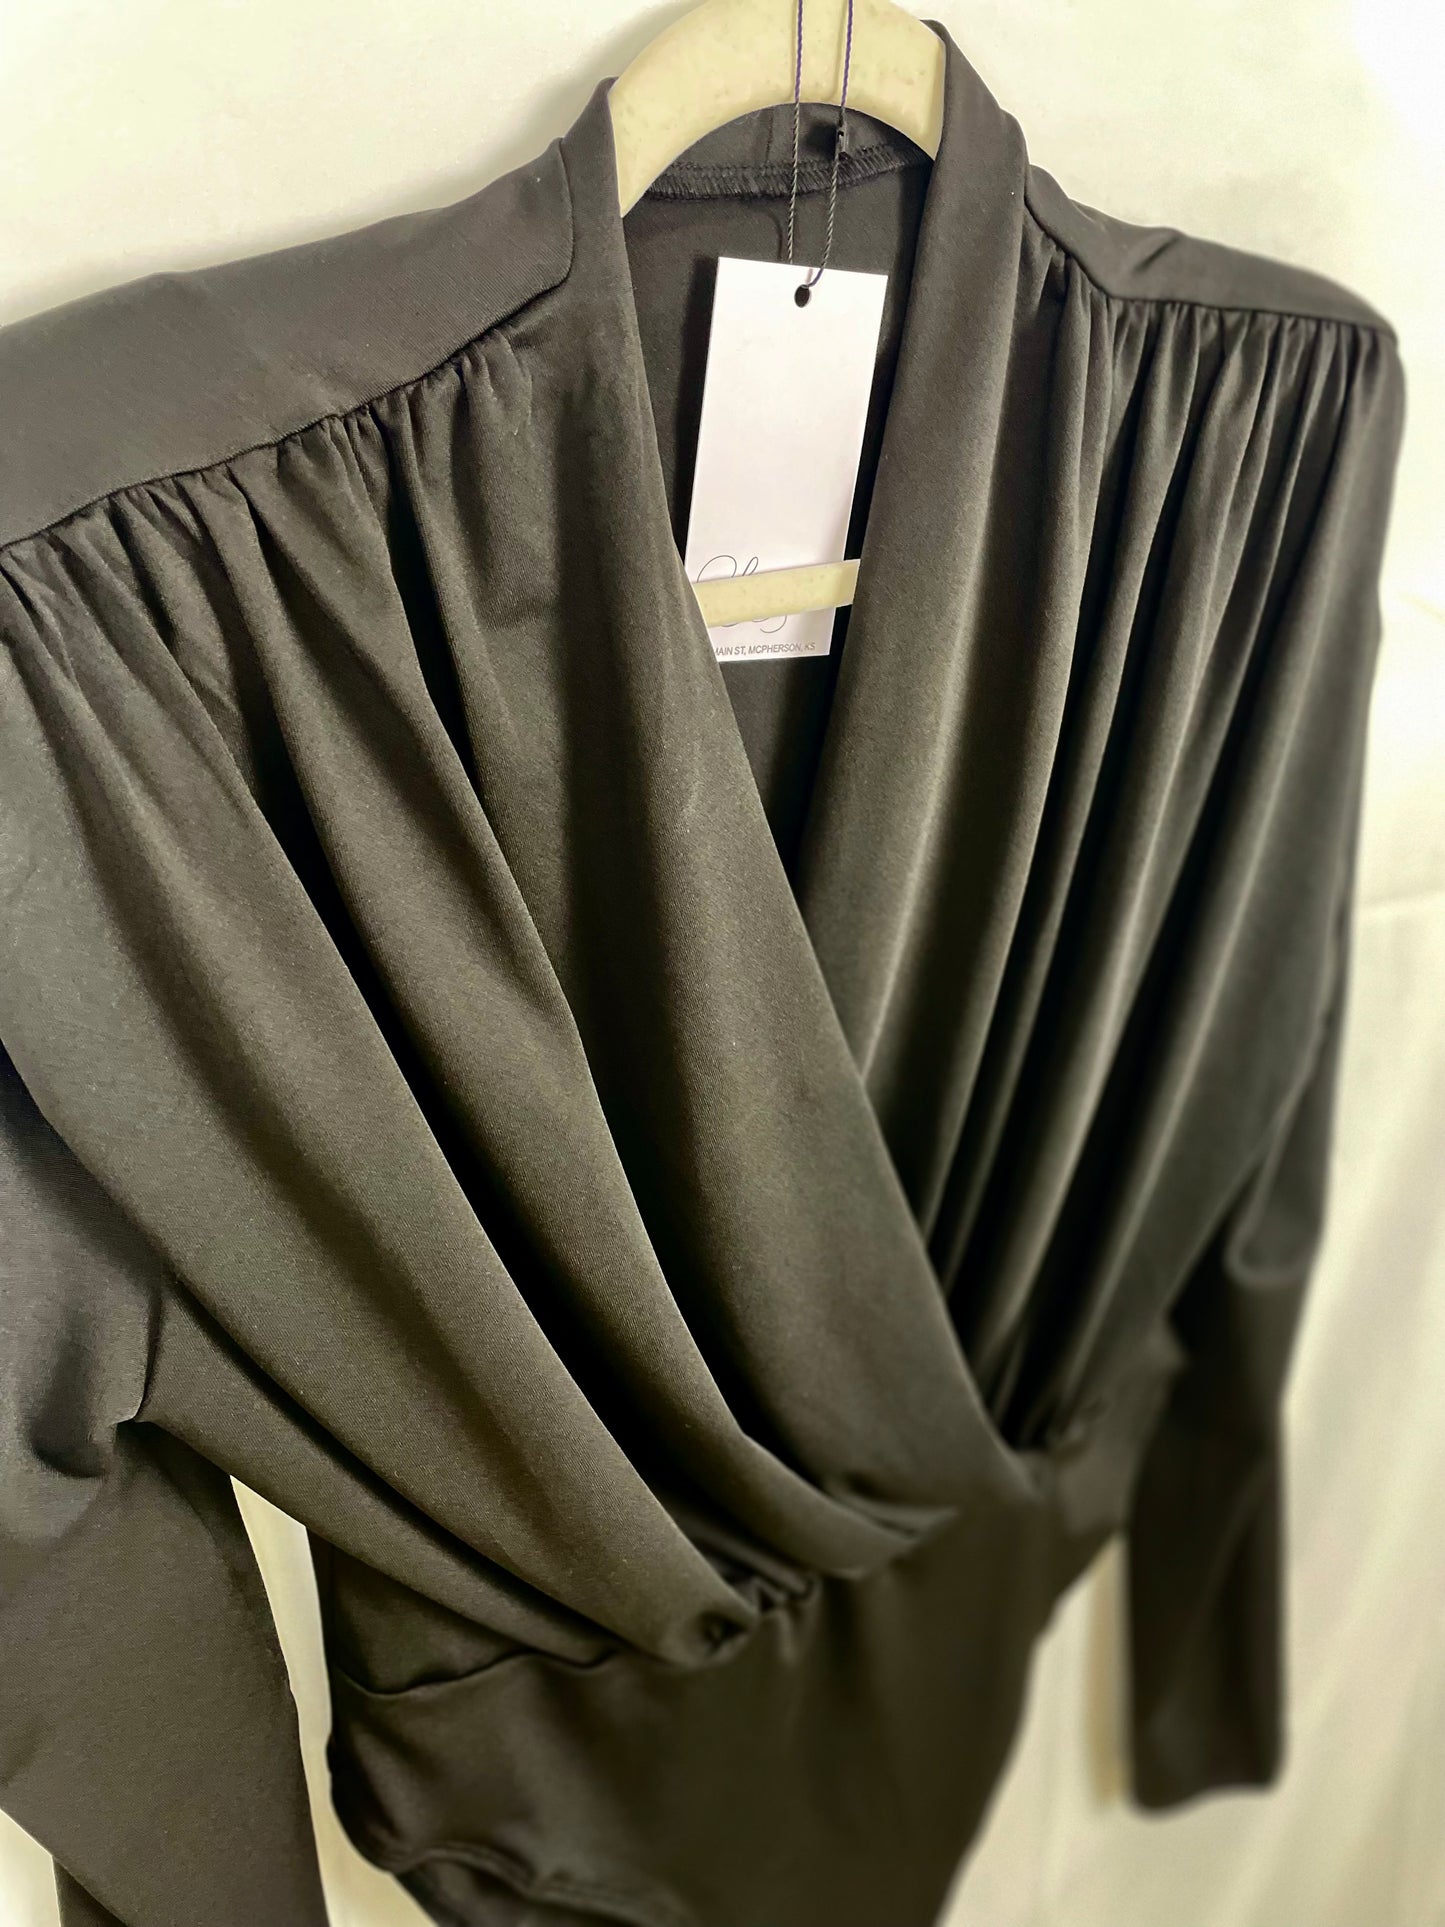 Black Long-Sleeve Bodysuit